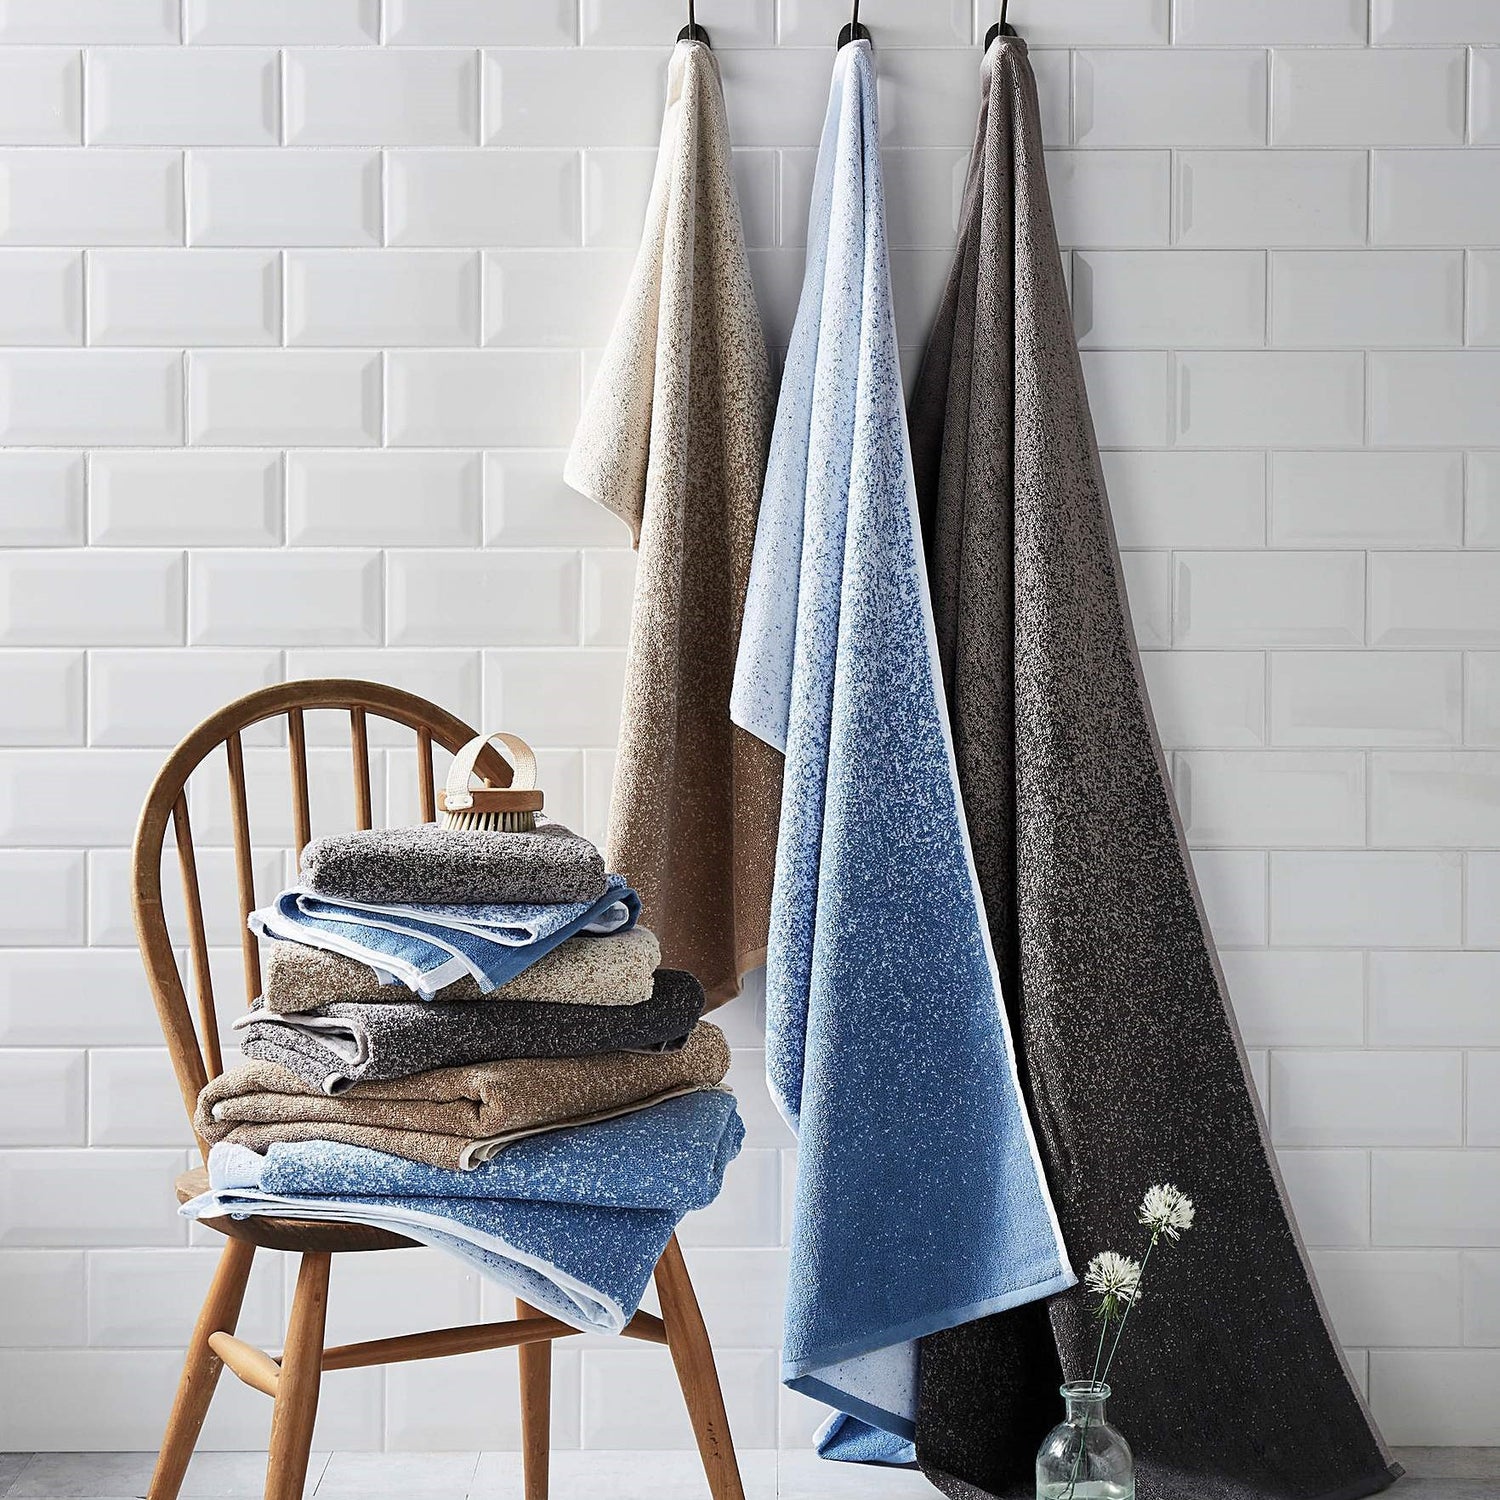 Kempton Luxury Ombre Patterned Bath Towels - 100% Cotton